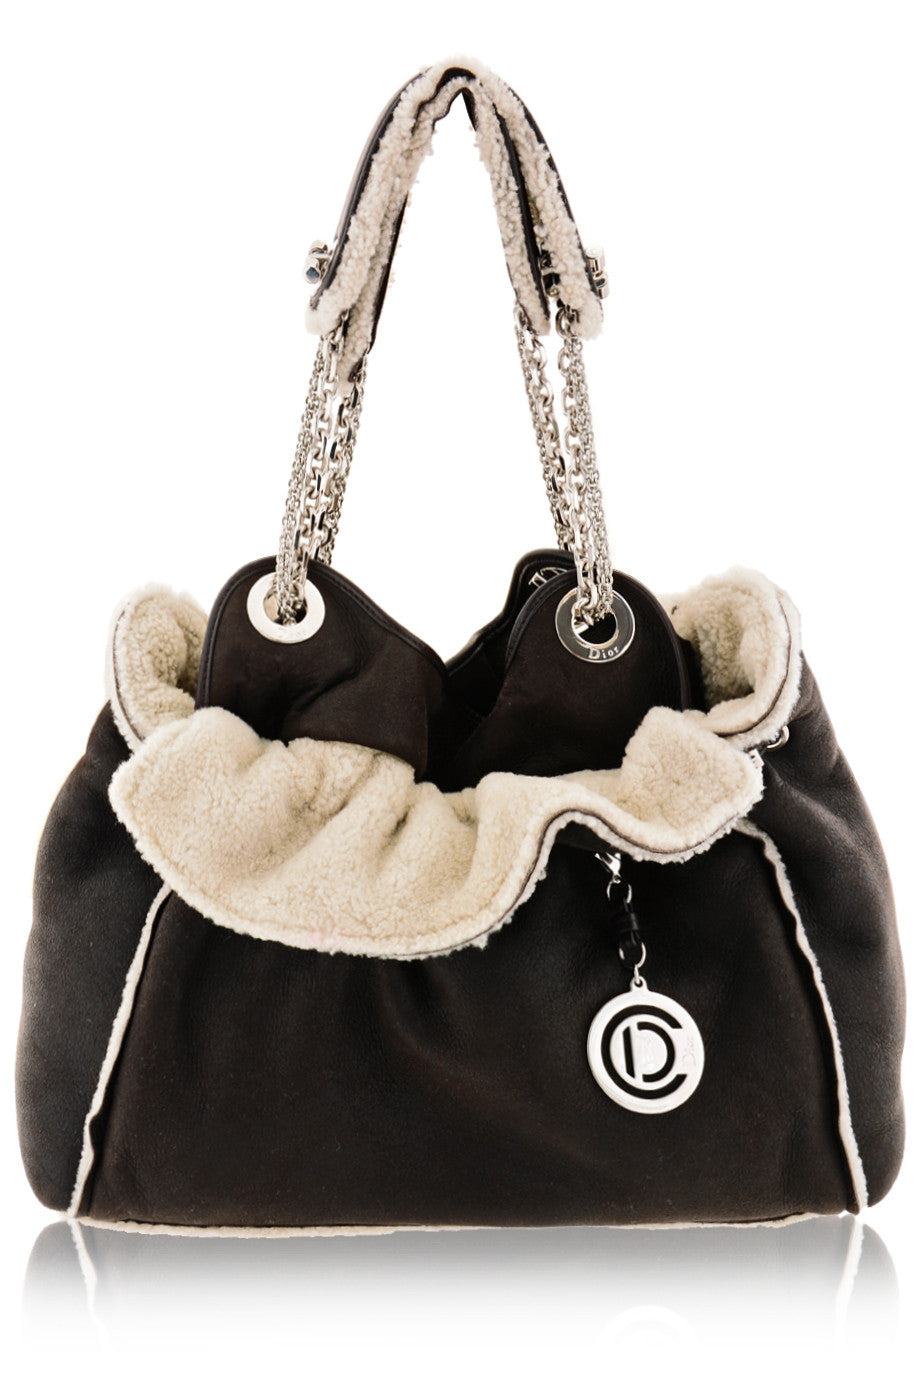 CANNAGE AGNEAU Brown Leather Shoulder Bag